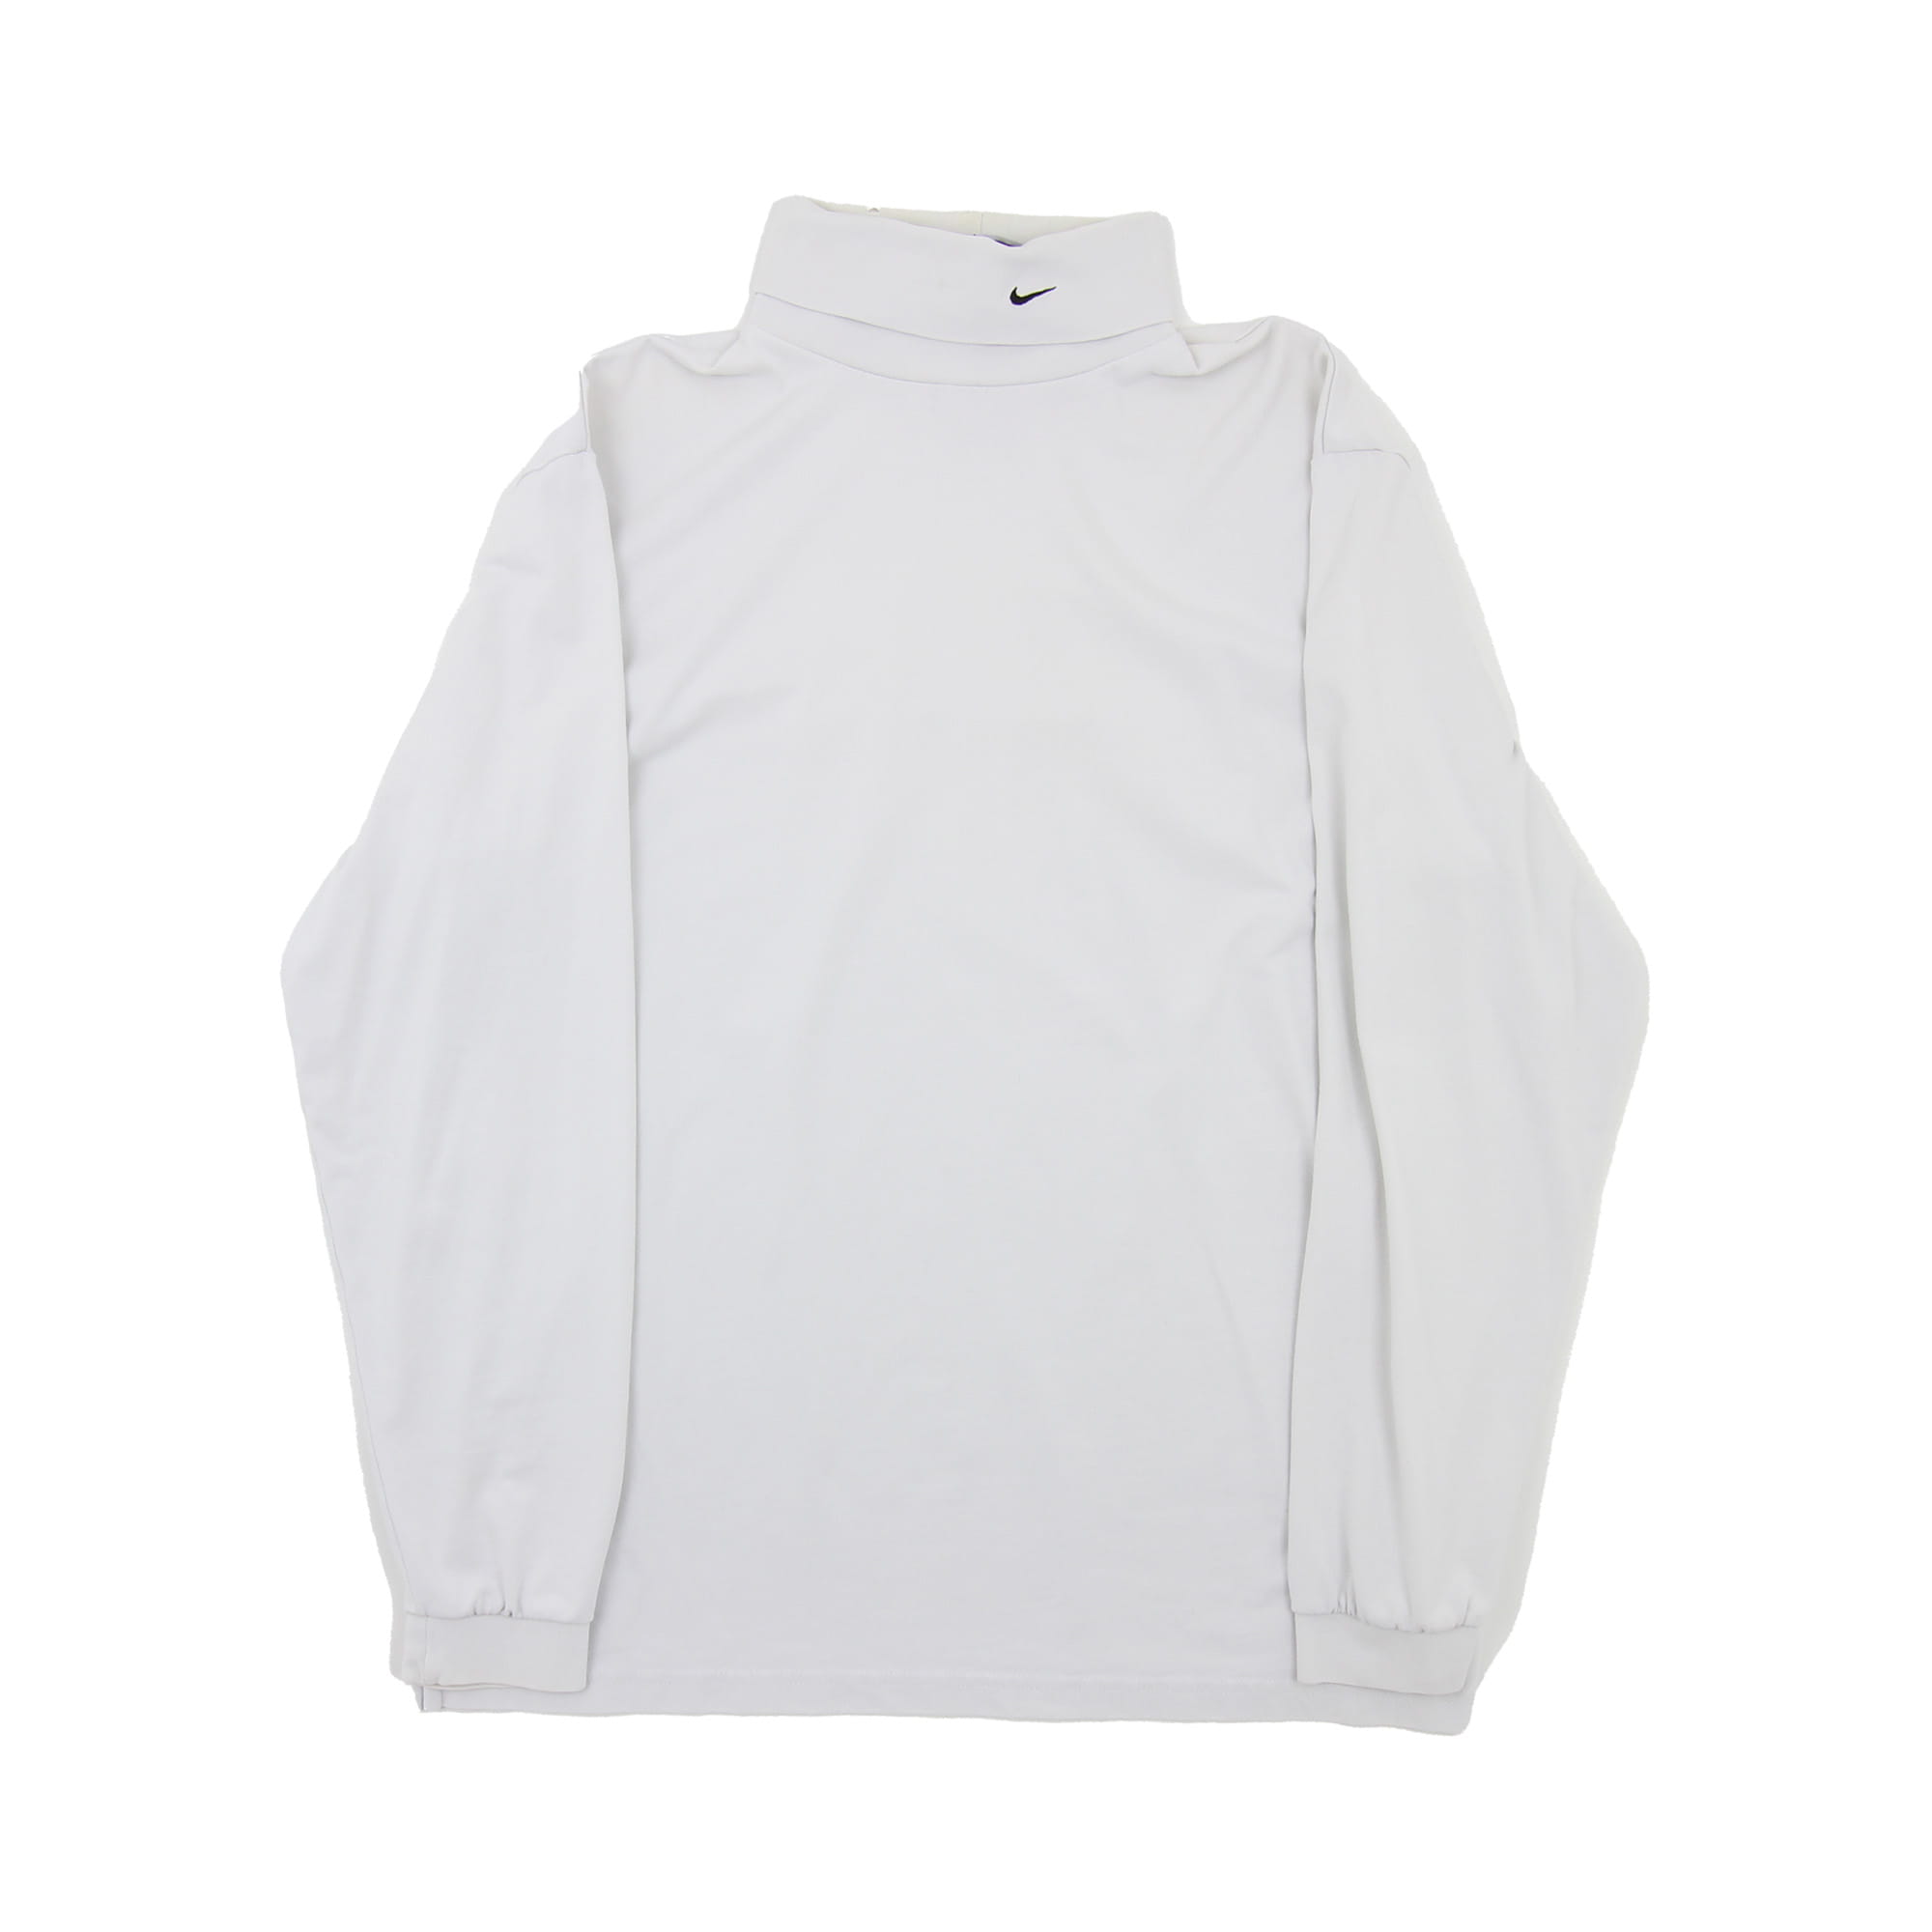 Nike Sweatshirt White -  XL